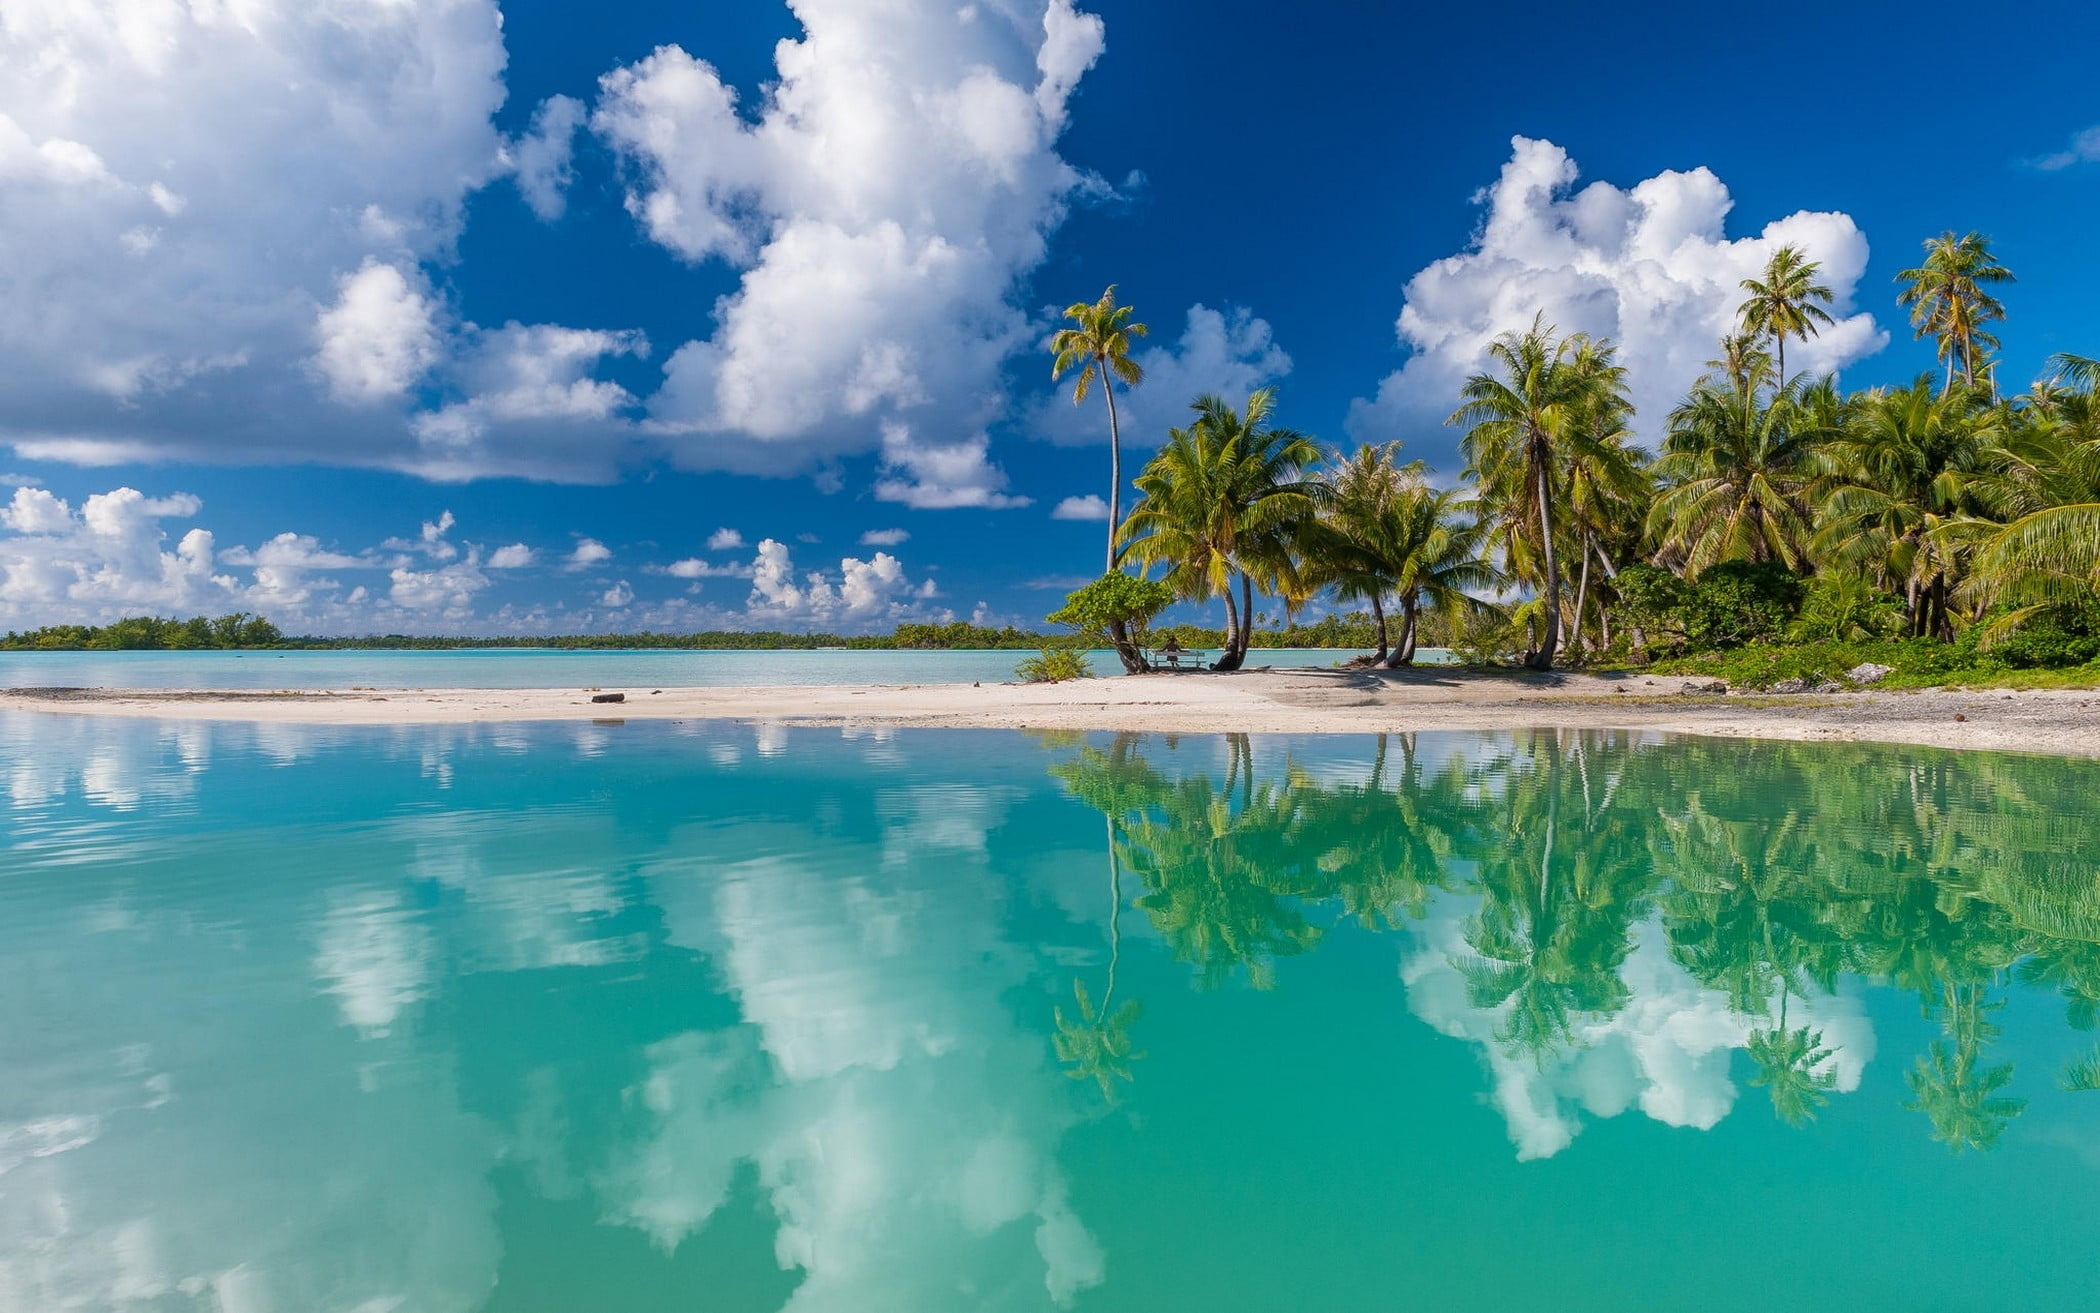 coconut trees, nature, tropical, island, beach